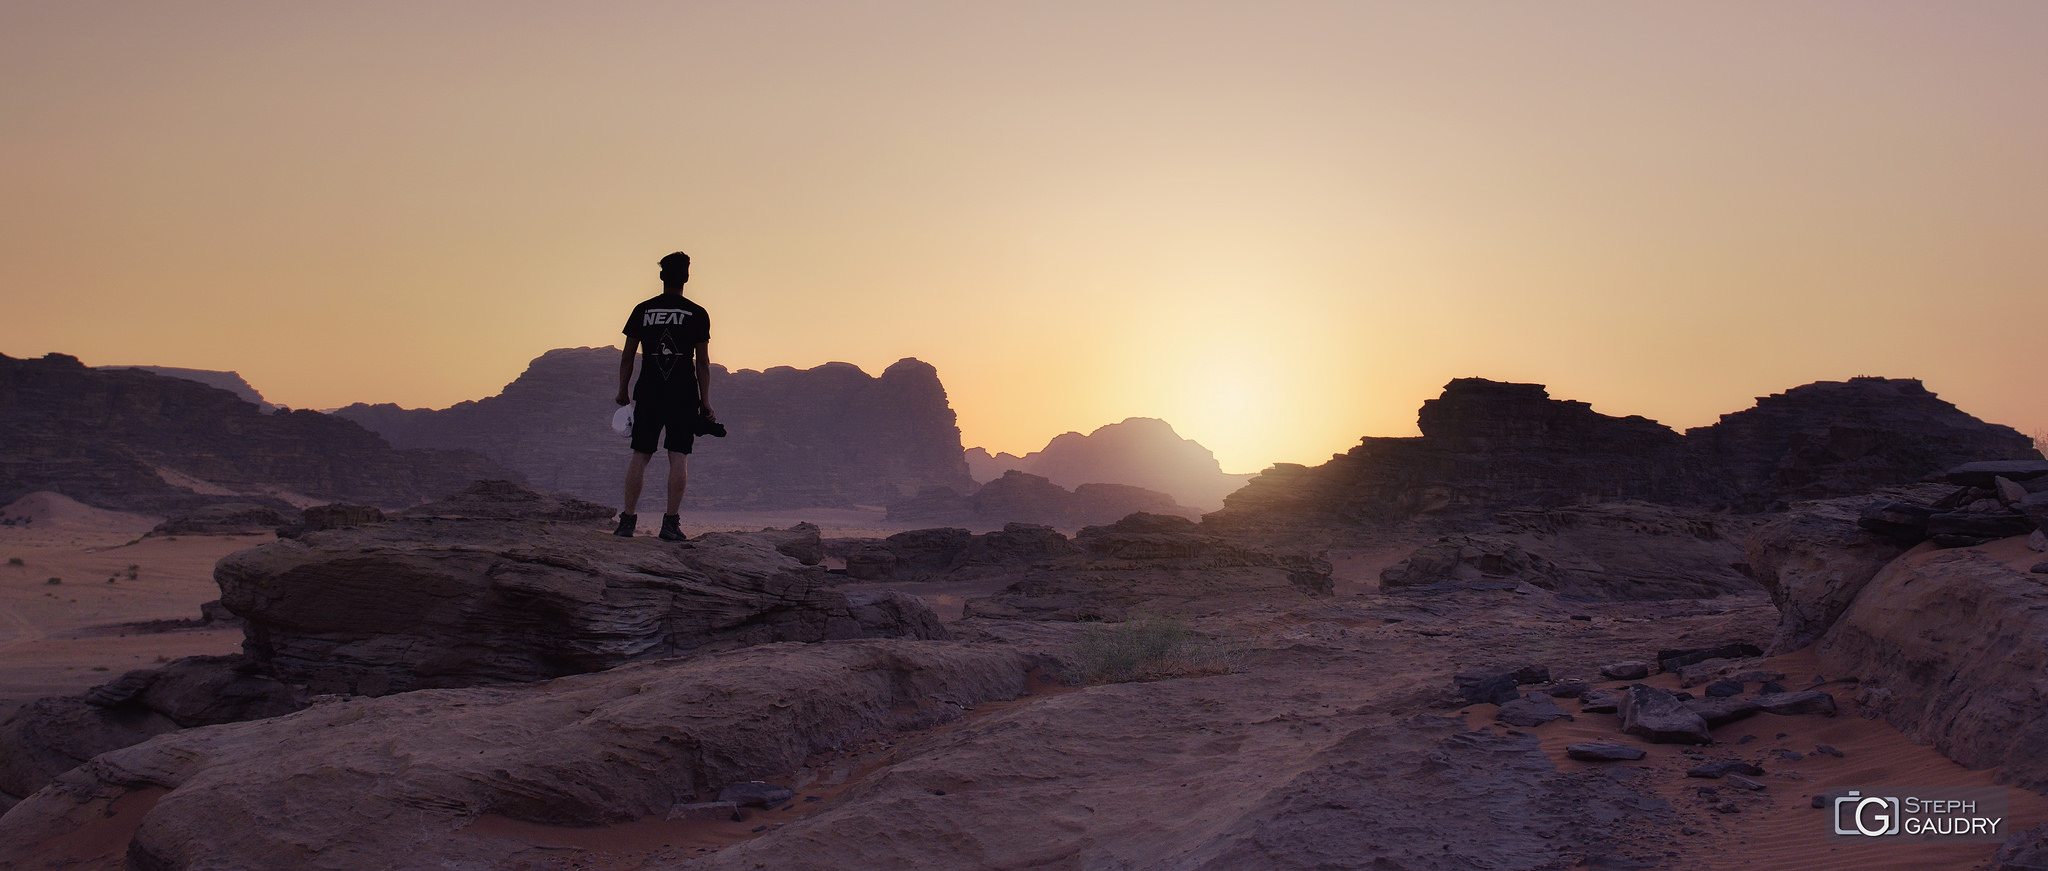 Wadi-Rum, sunset in the desert - my son Tom [Klik om de diavoorstelling te starten]